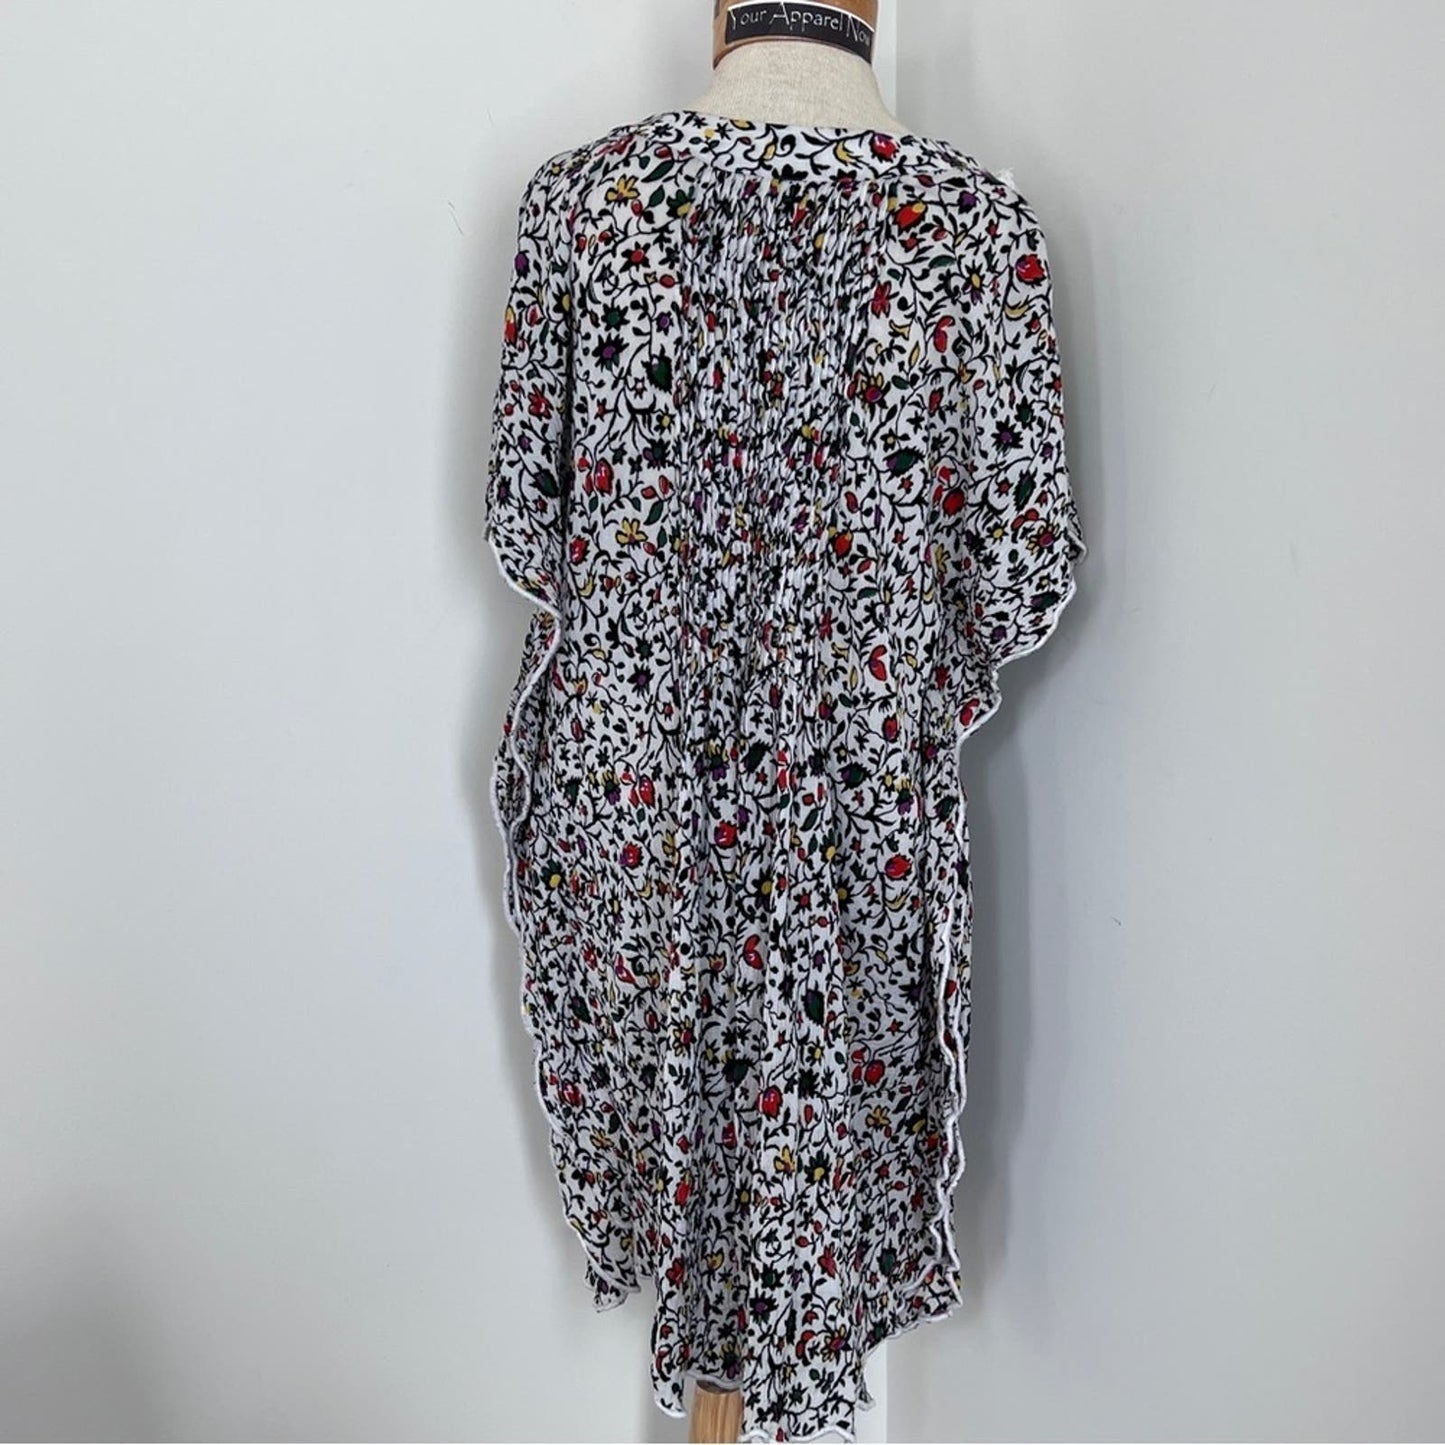 Club Monaco Multi-Color Tassel Cover up Dress size XS (398)